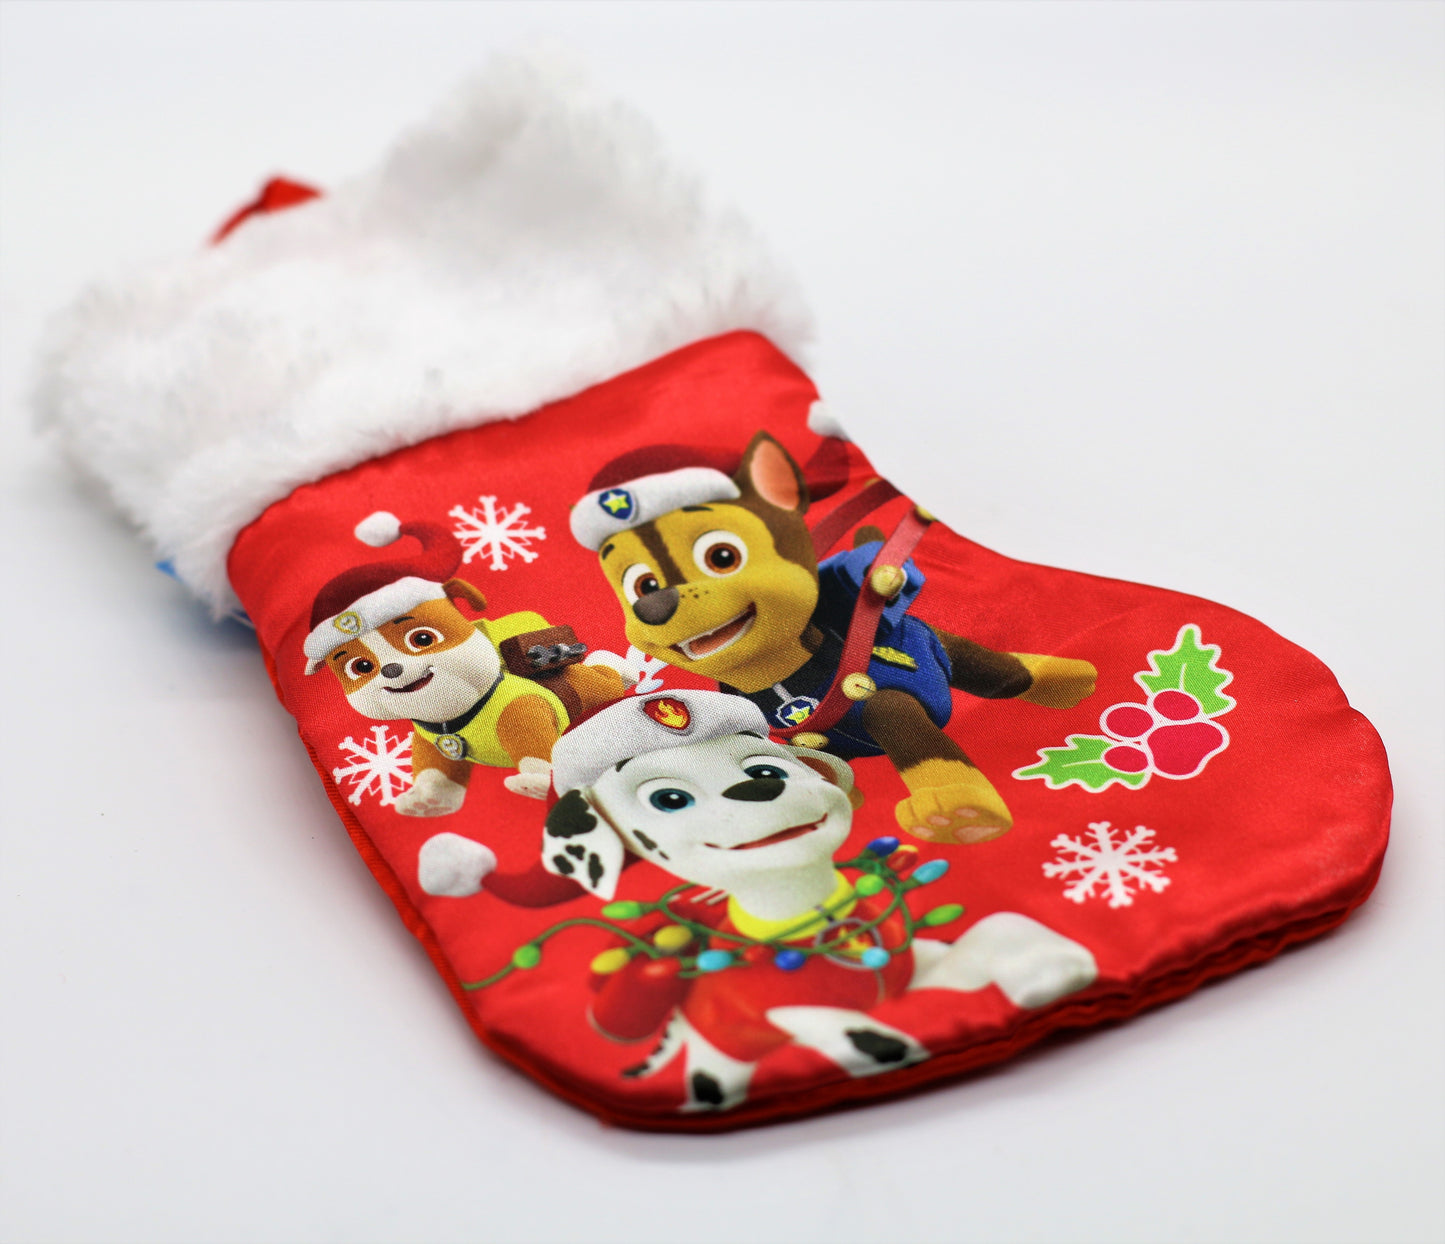 Mini Christmas stockings